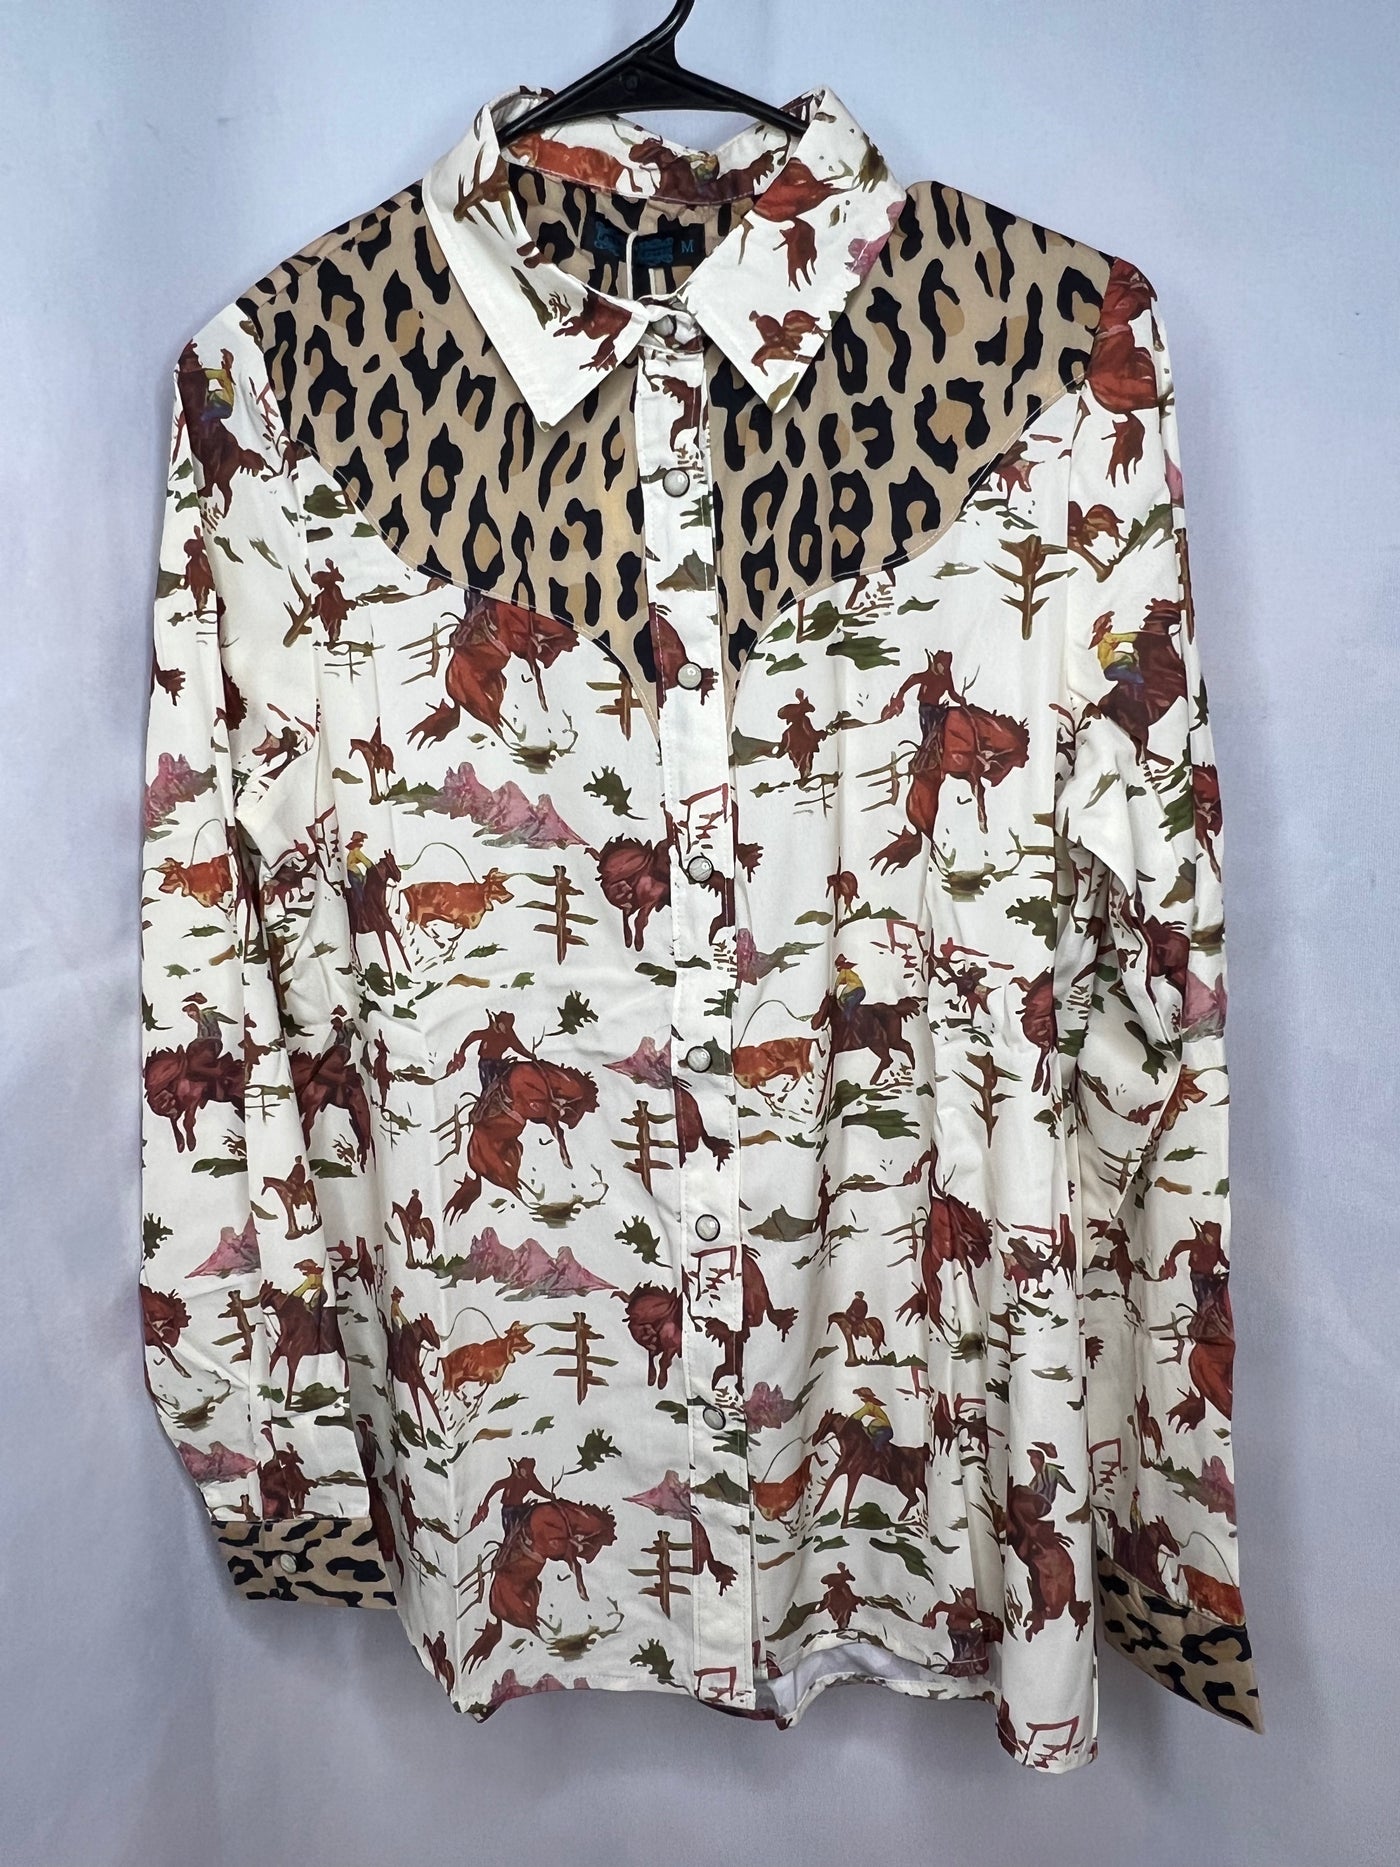 Fashion Express Women's Cheetah/Horse Print Shirt